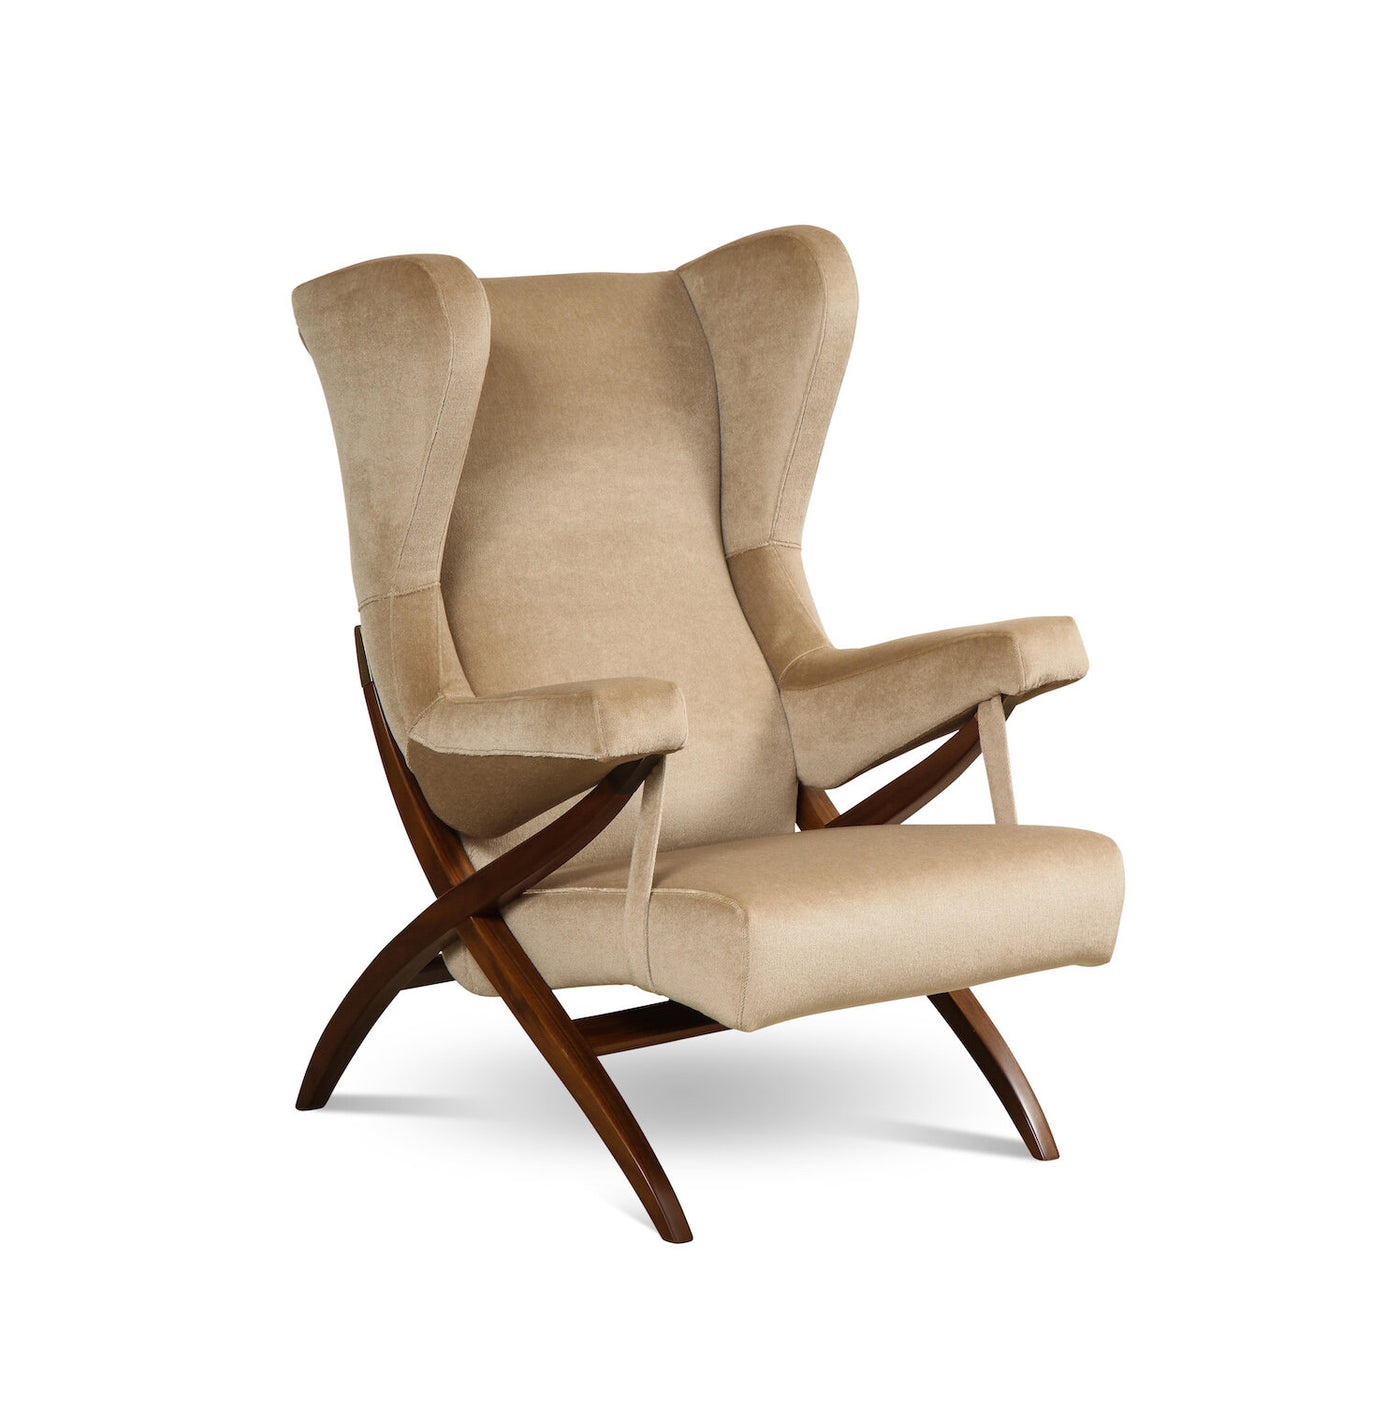 "Fiorenza" Armchair by Franco Albini for Arflex